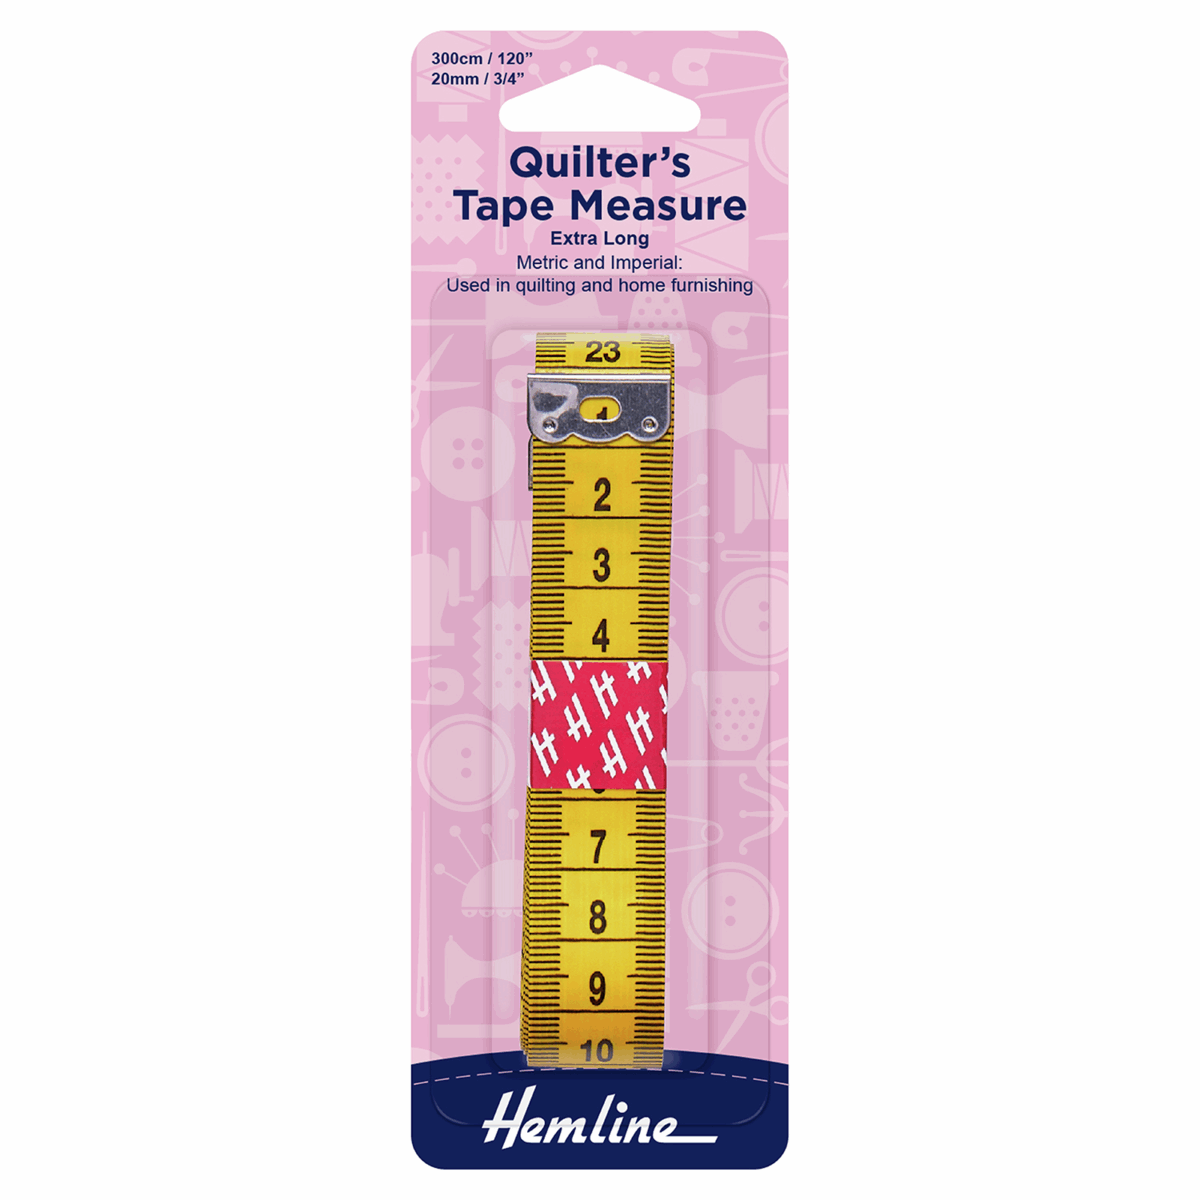 Hemline Extra Long Tape Measure: 300cm